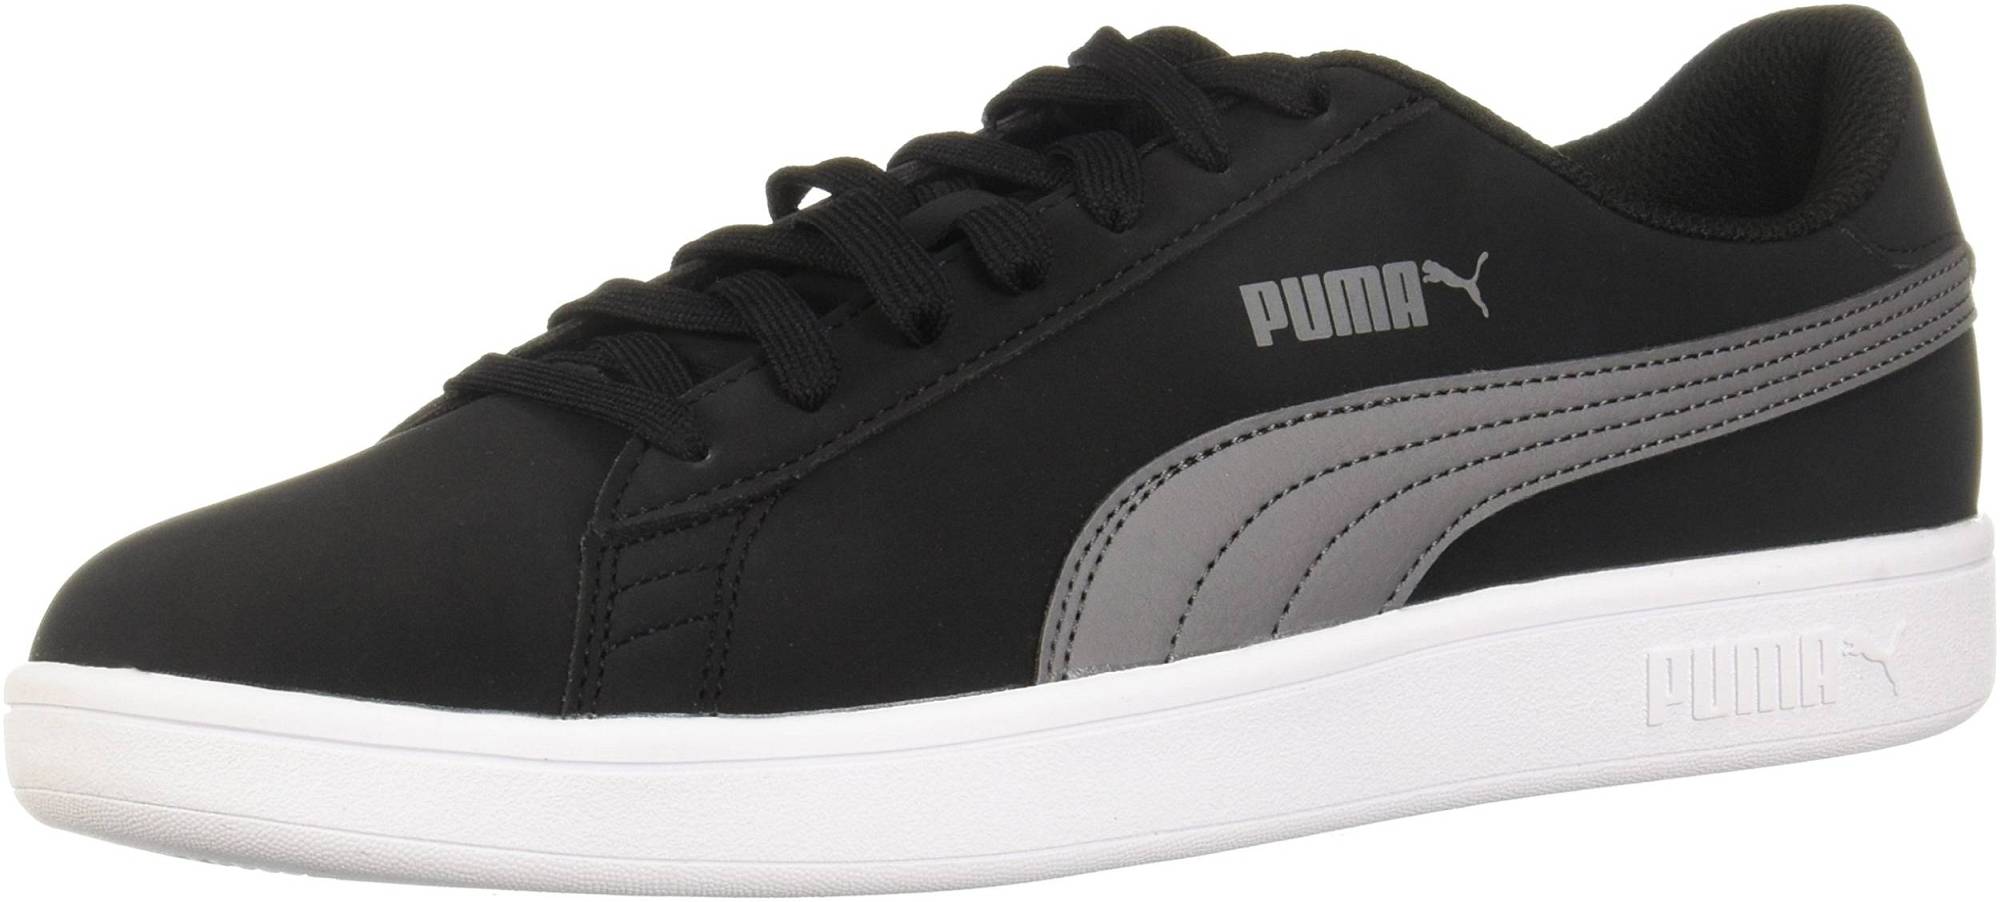 Puma Smash Buck – Shoes Reviews & Reasons To Buy